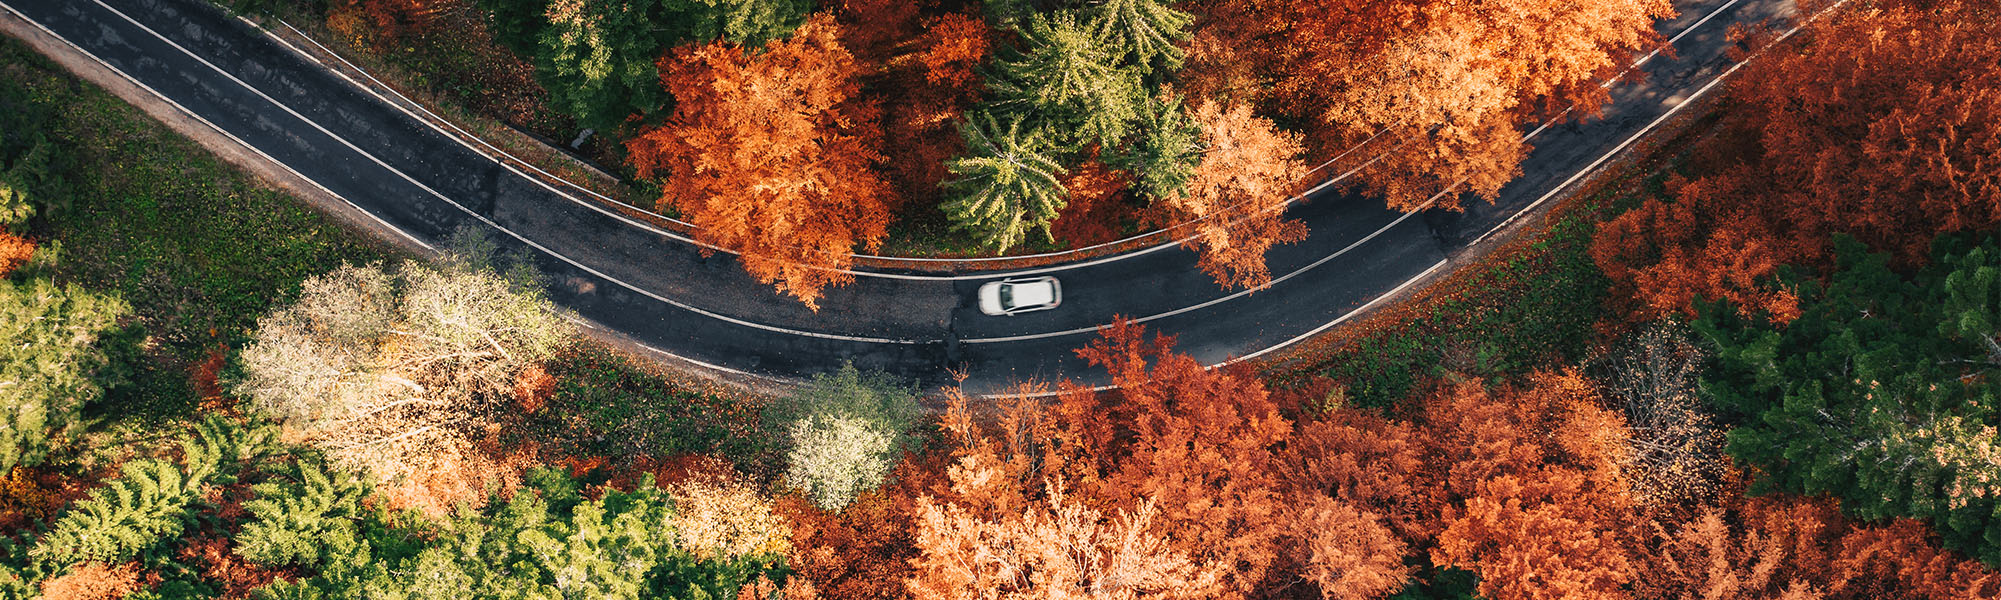 car driving down road in fall